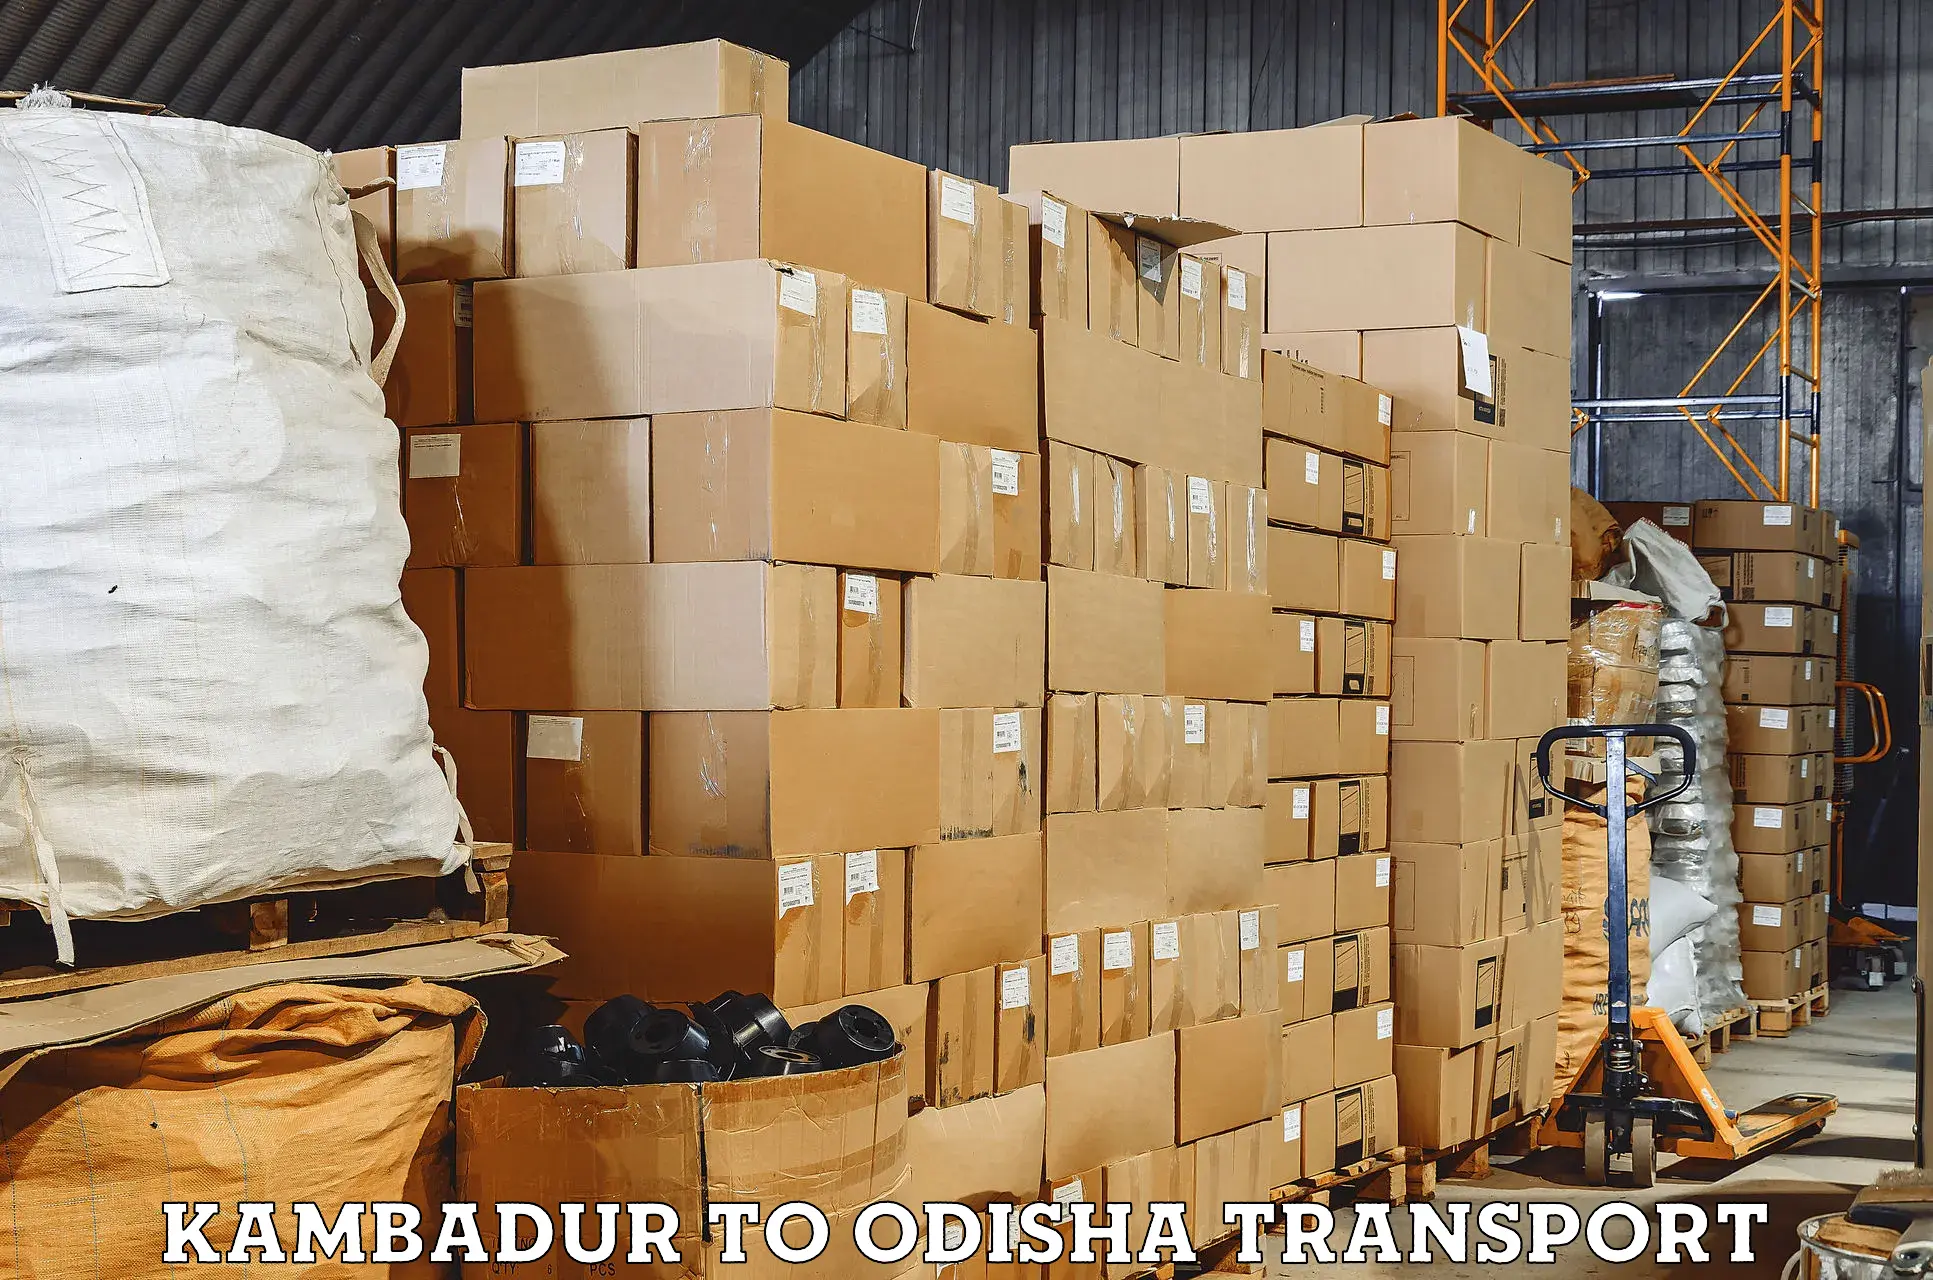 Container transportation services in Kambadur to Kupari